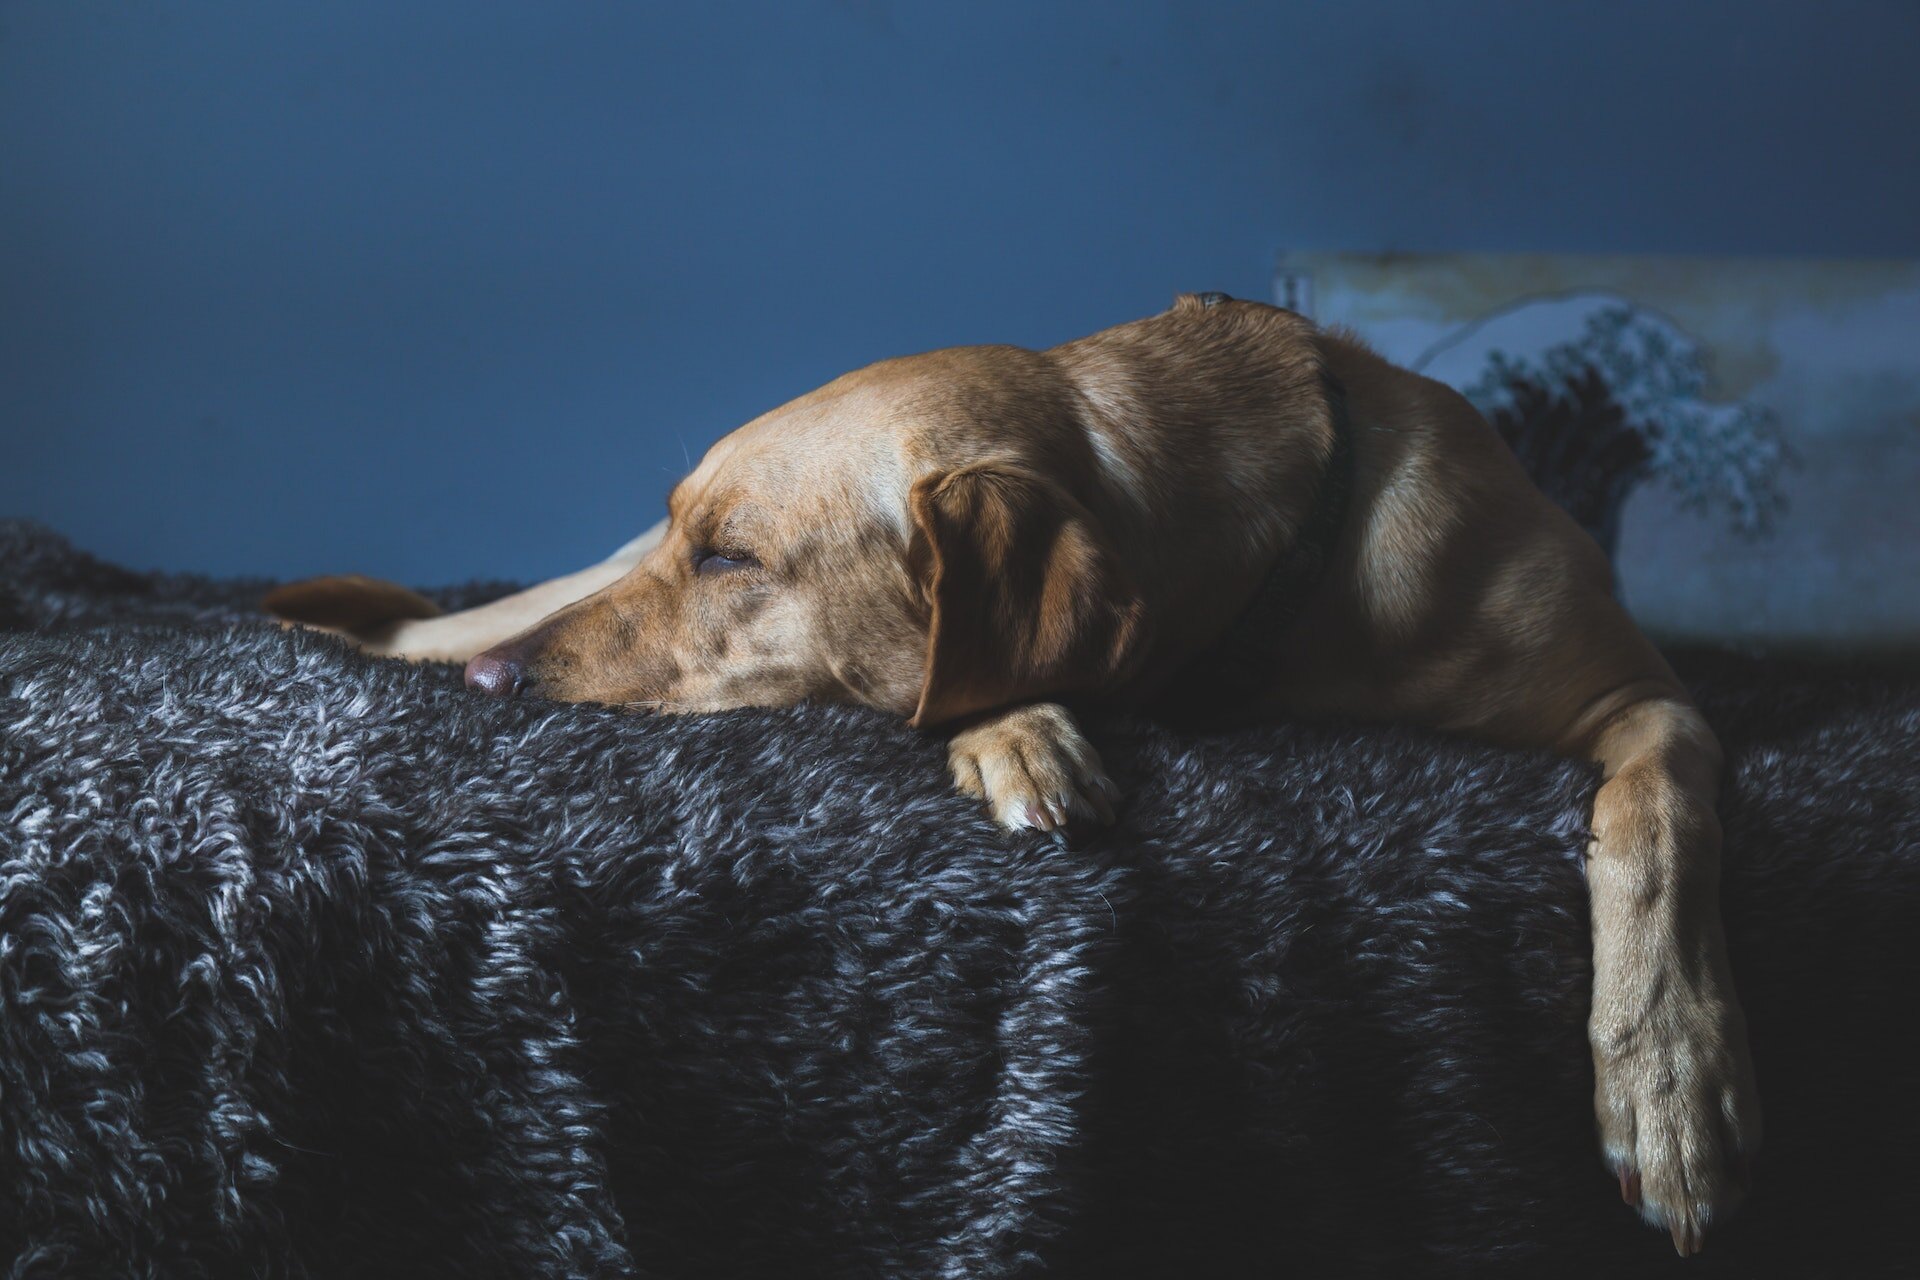 A senior dog sleeping on a bed